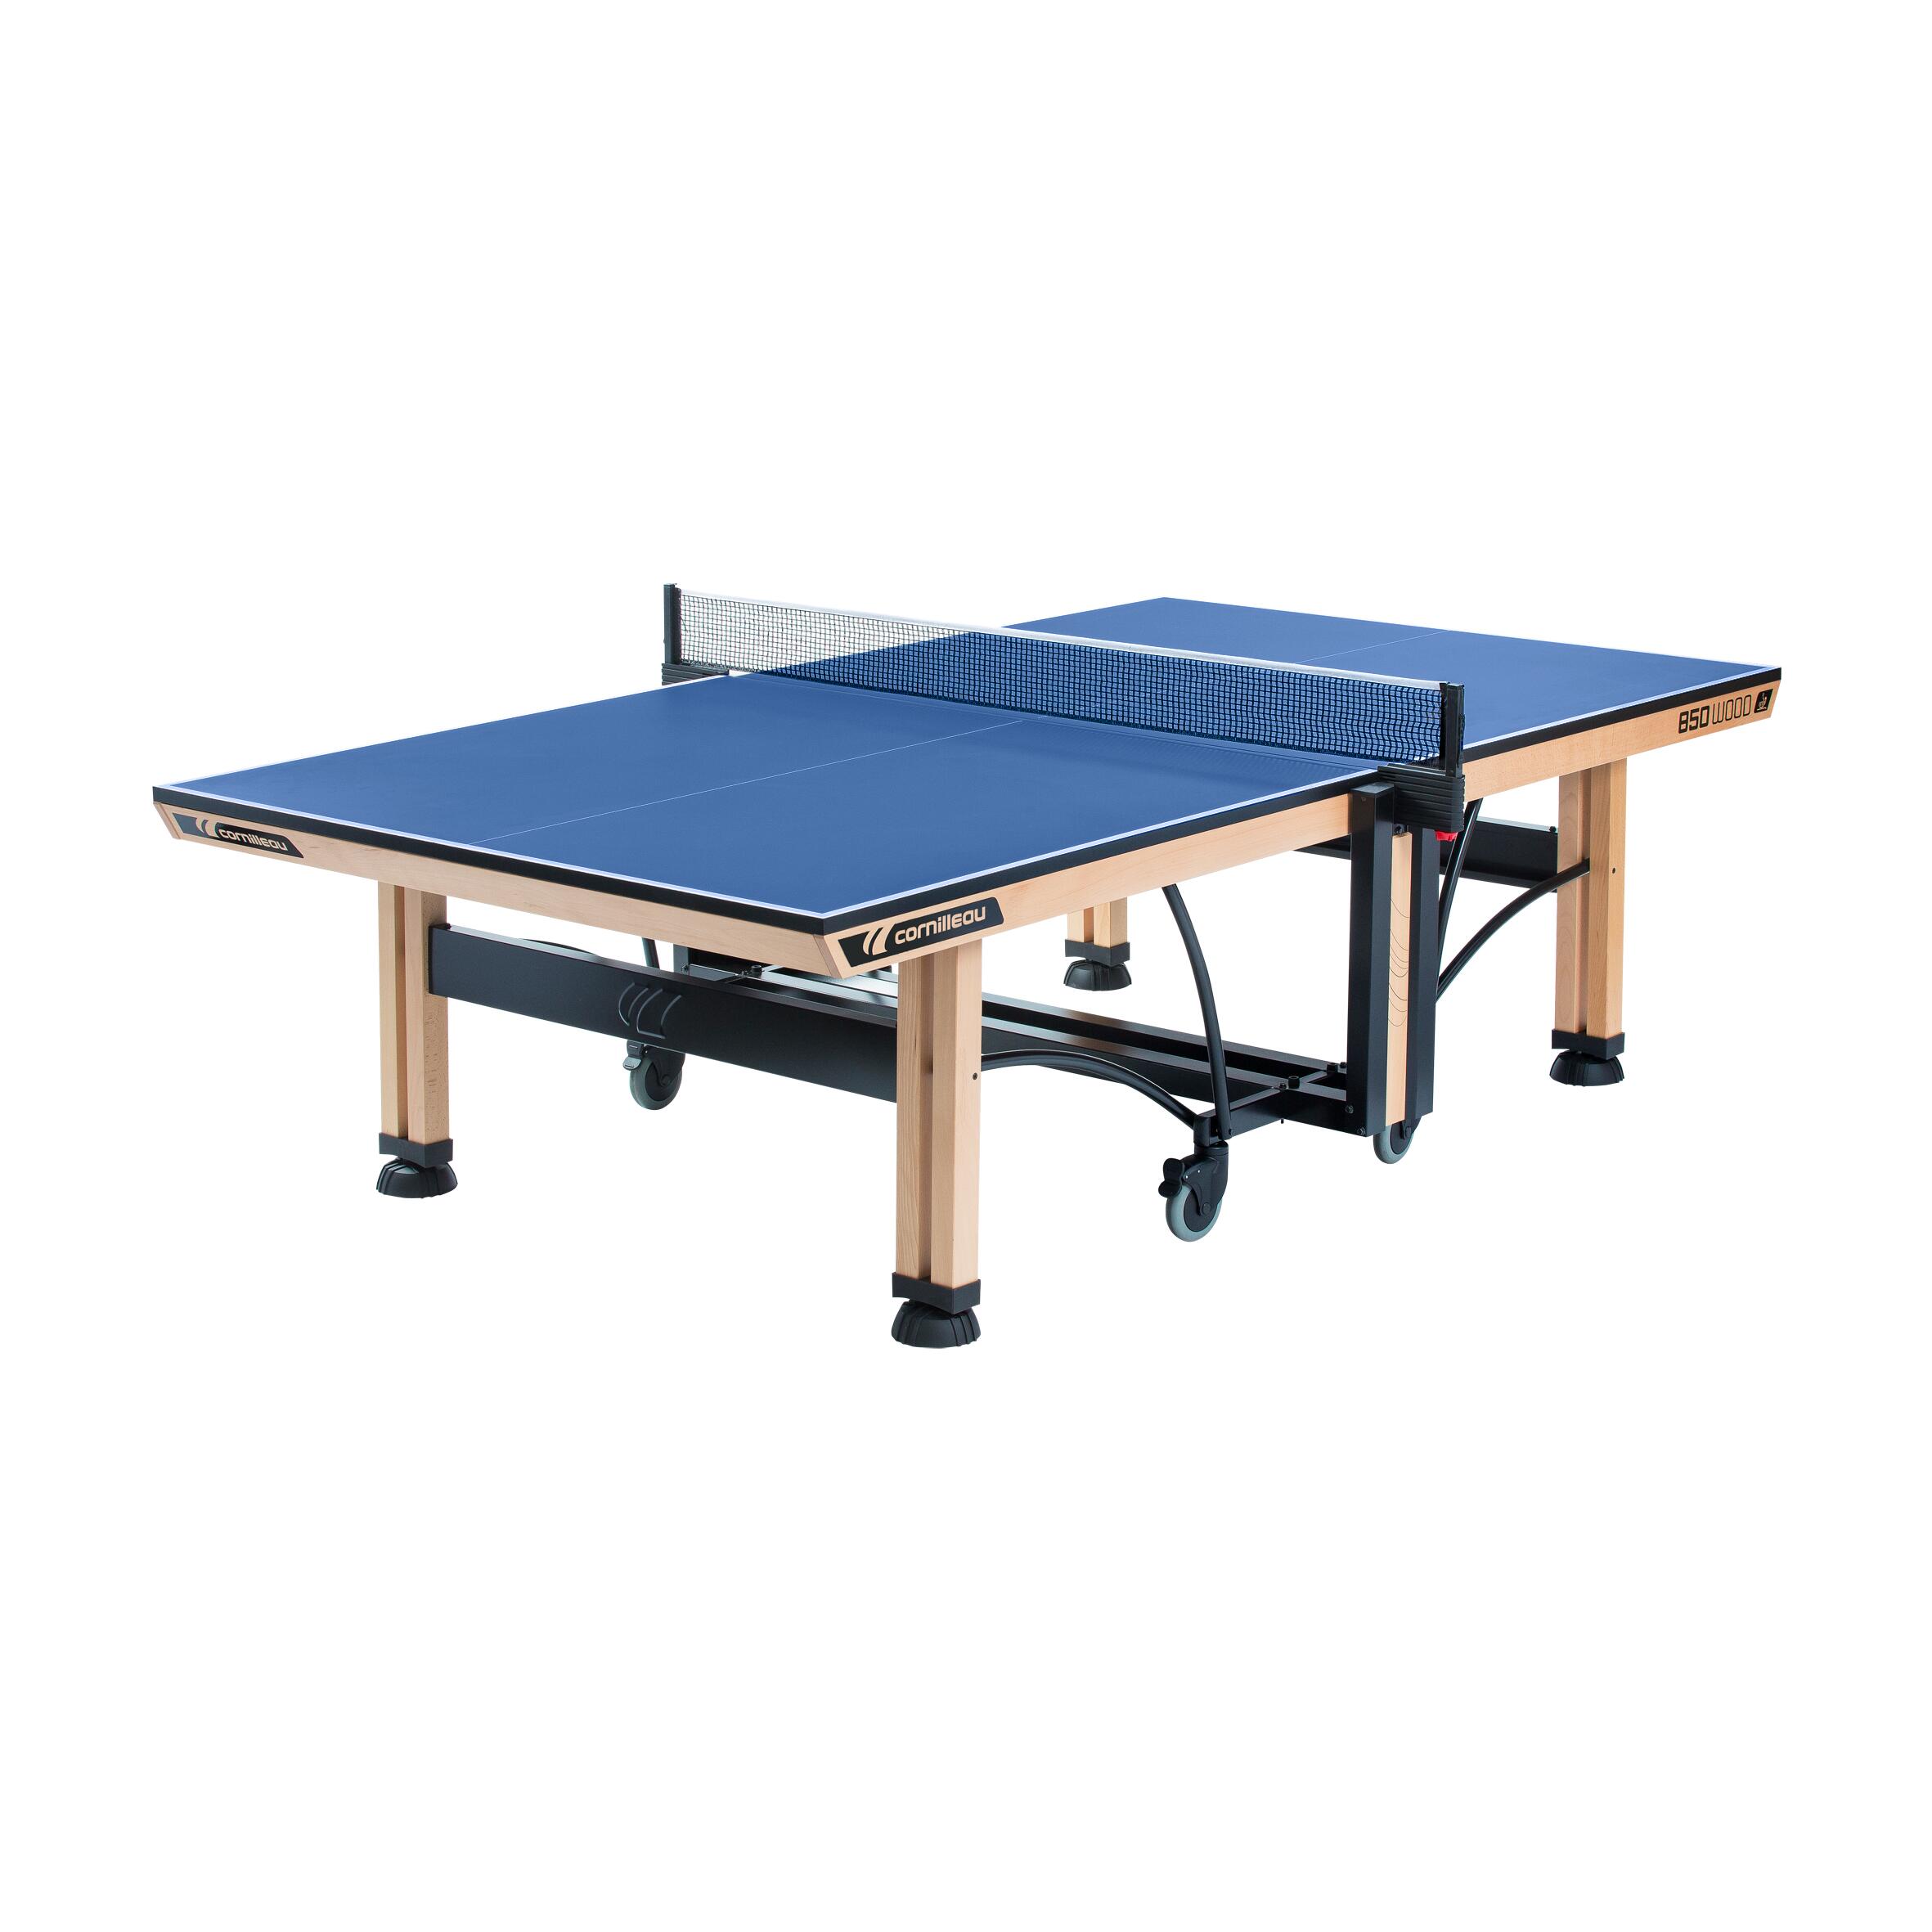 850 WOOD ITTF Indoor Table Tennis Table - Blue 1/6